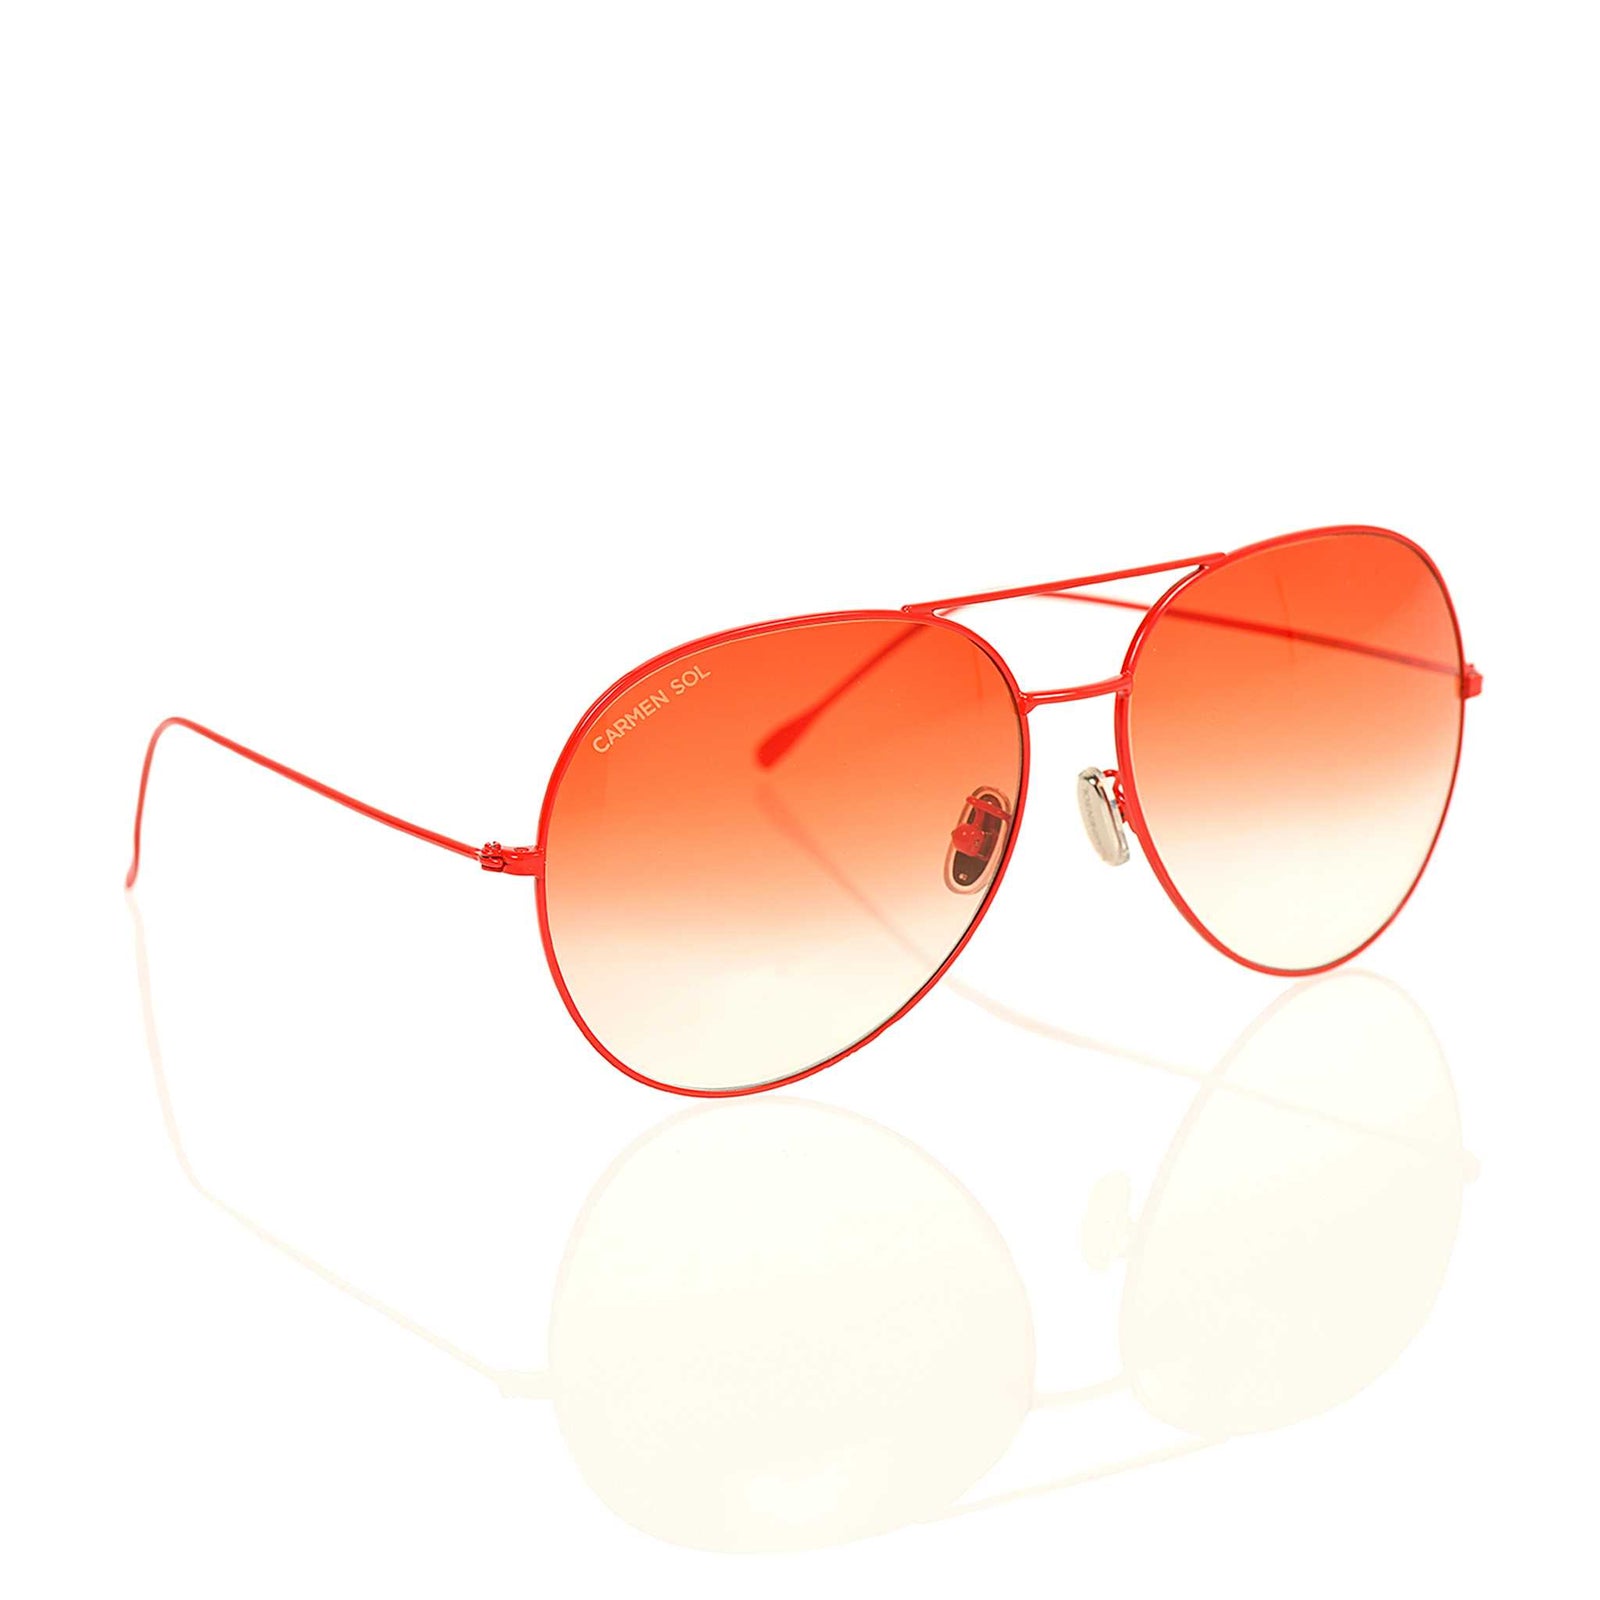 True red sunglasses aviator for women and for men